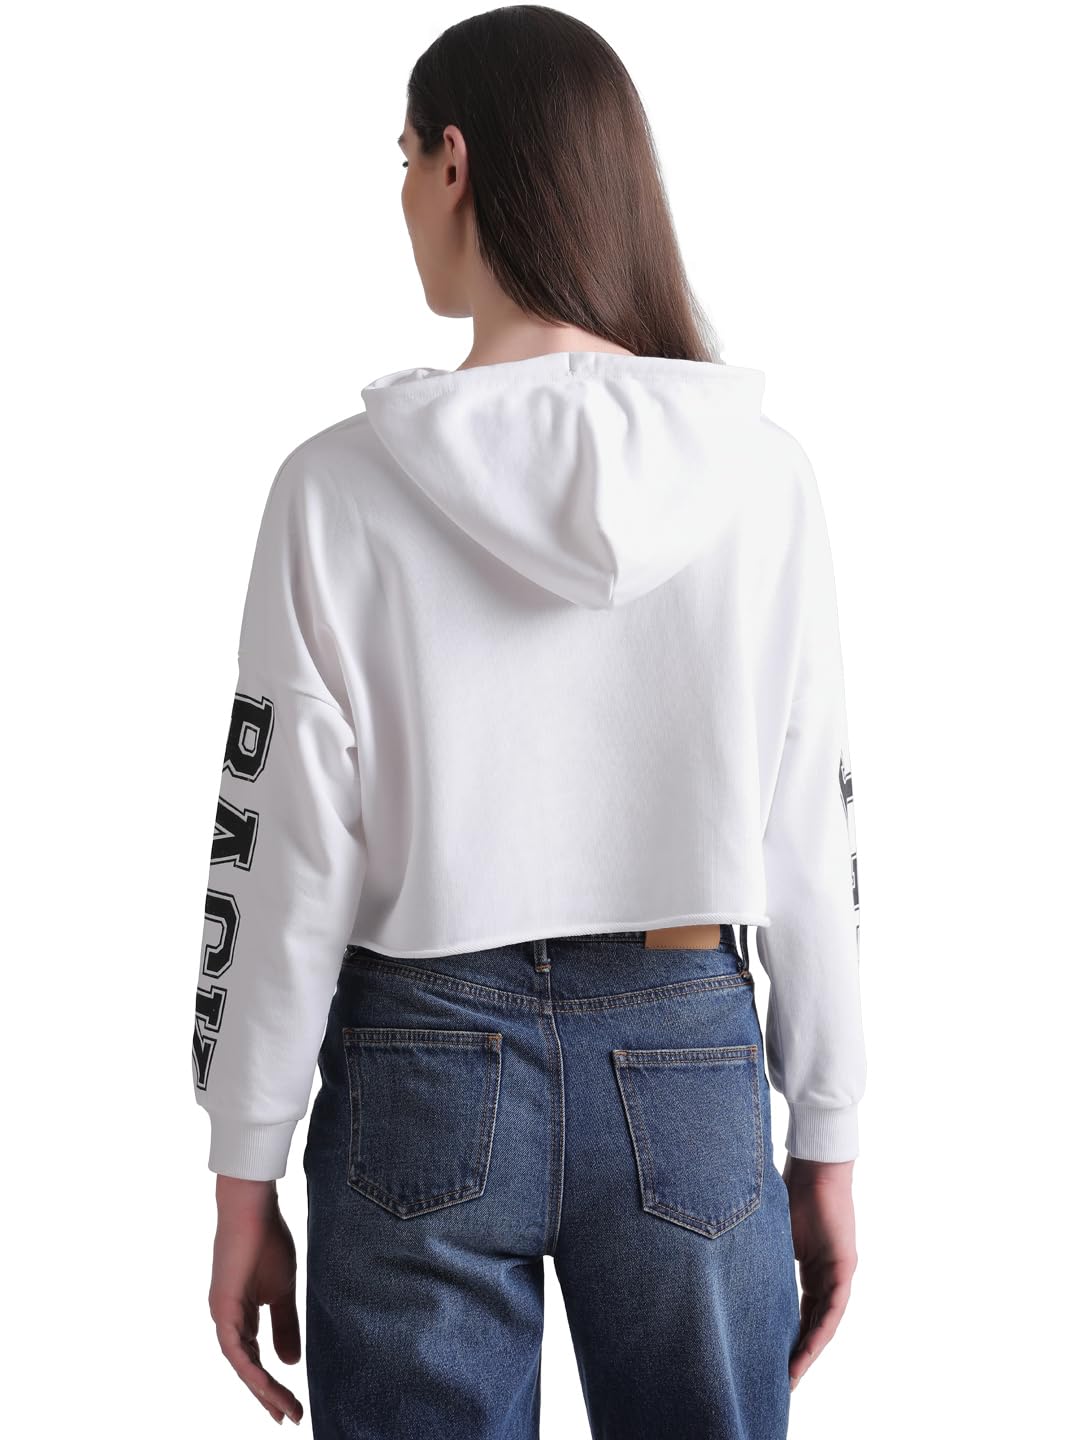 Only Women's Cotton Blend White Sweatshirt_X-Small